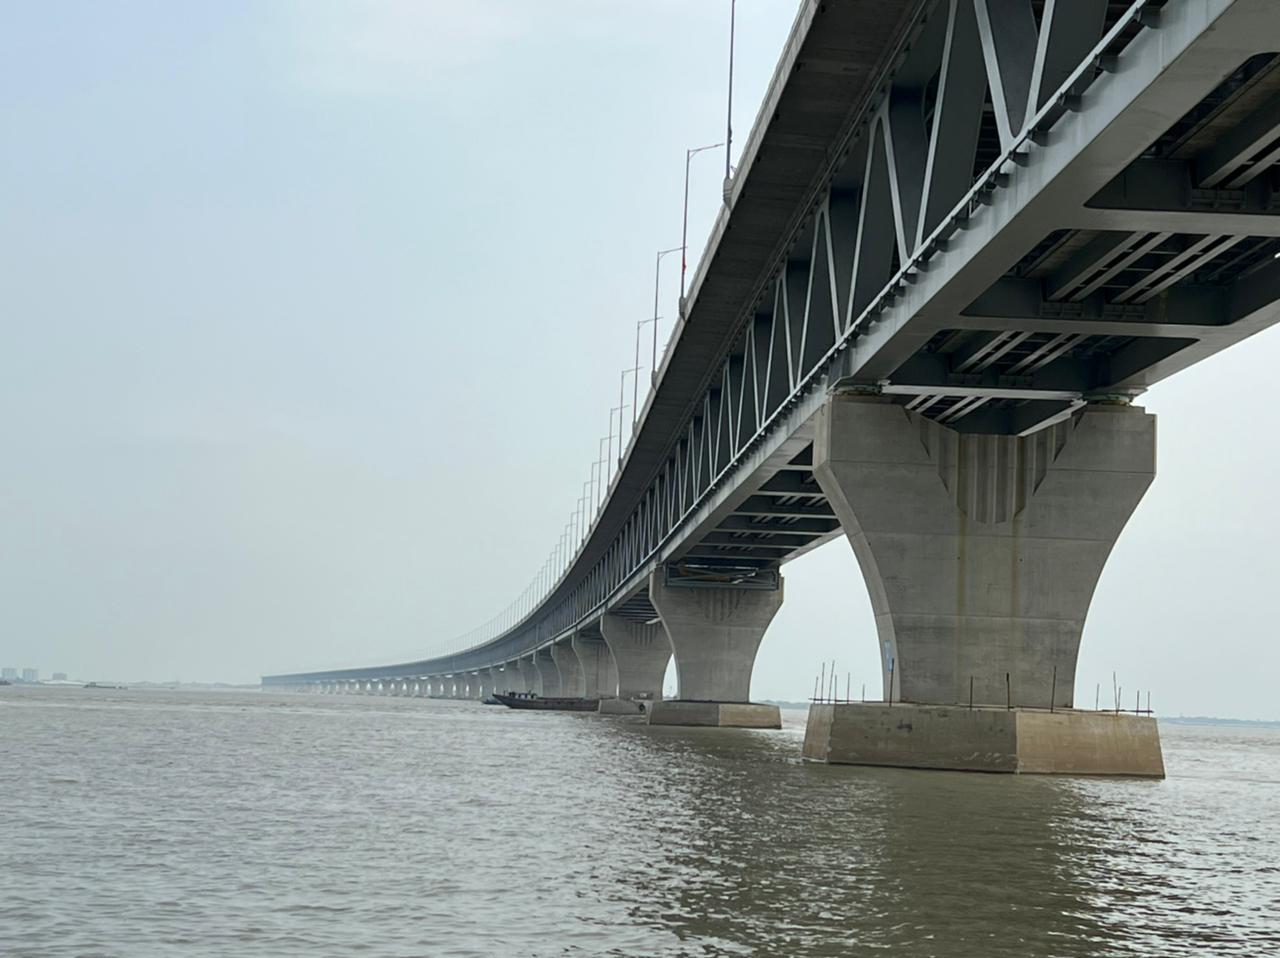 Padma Bridge: Highest toll of Tk 31m collected Friday